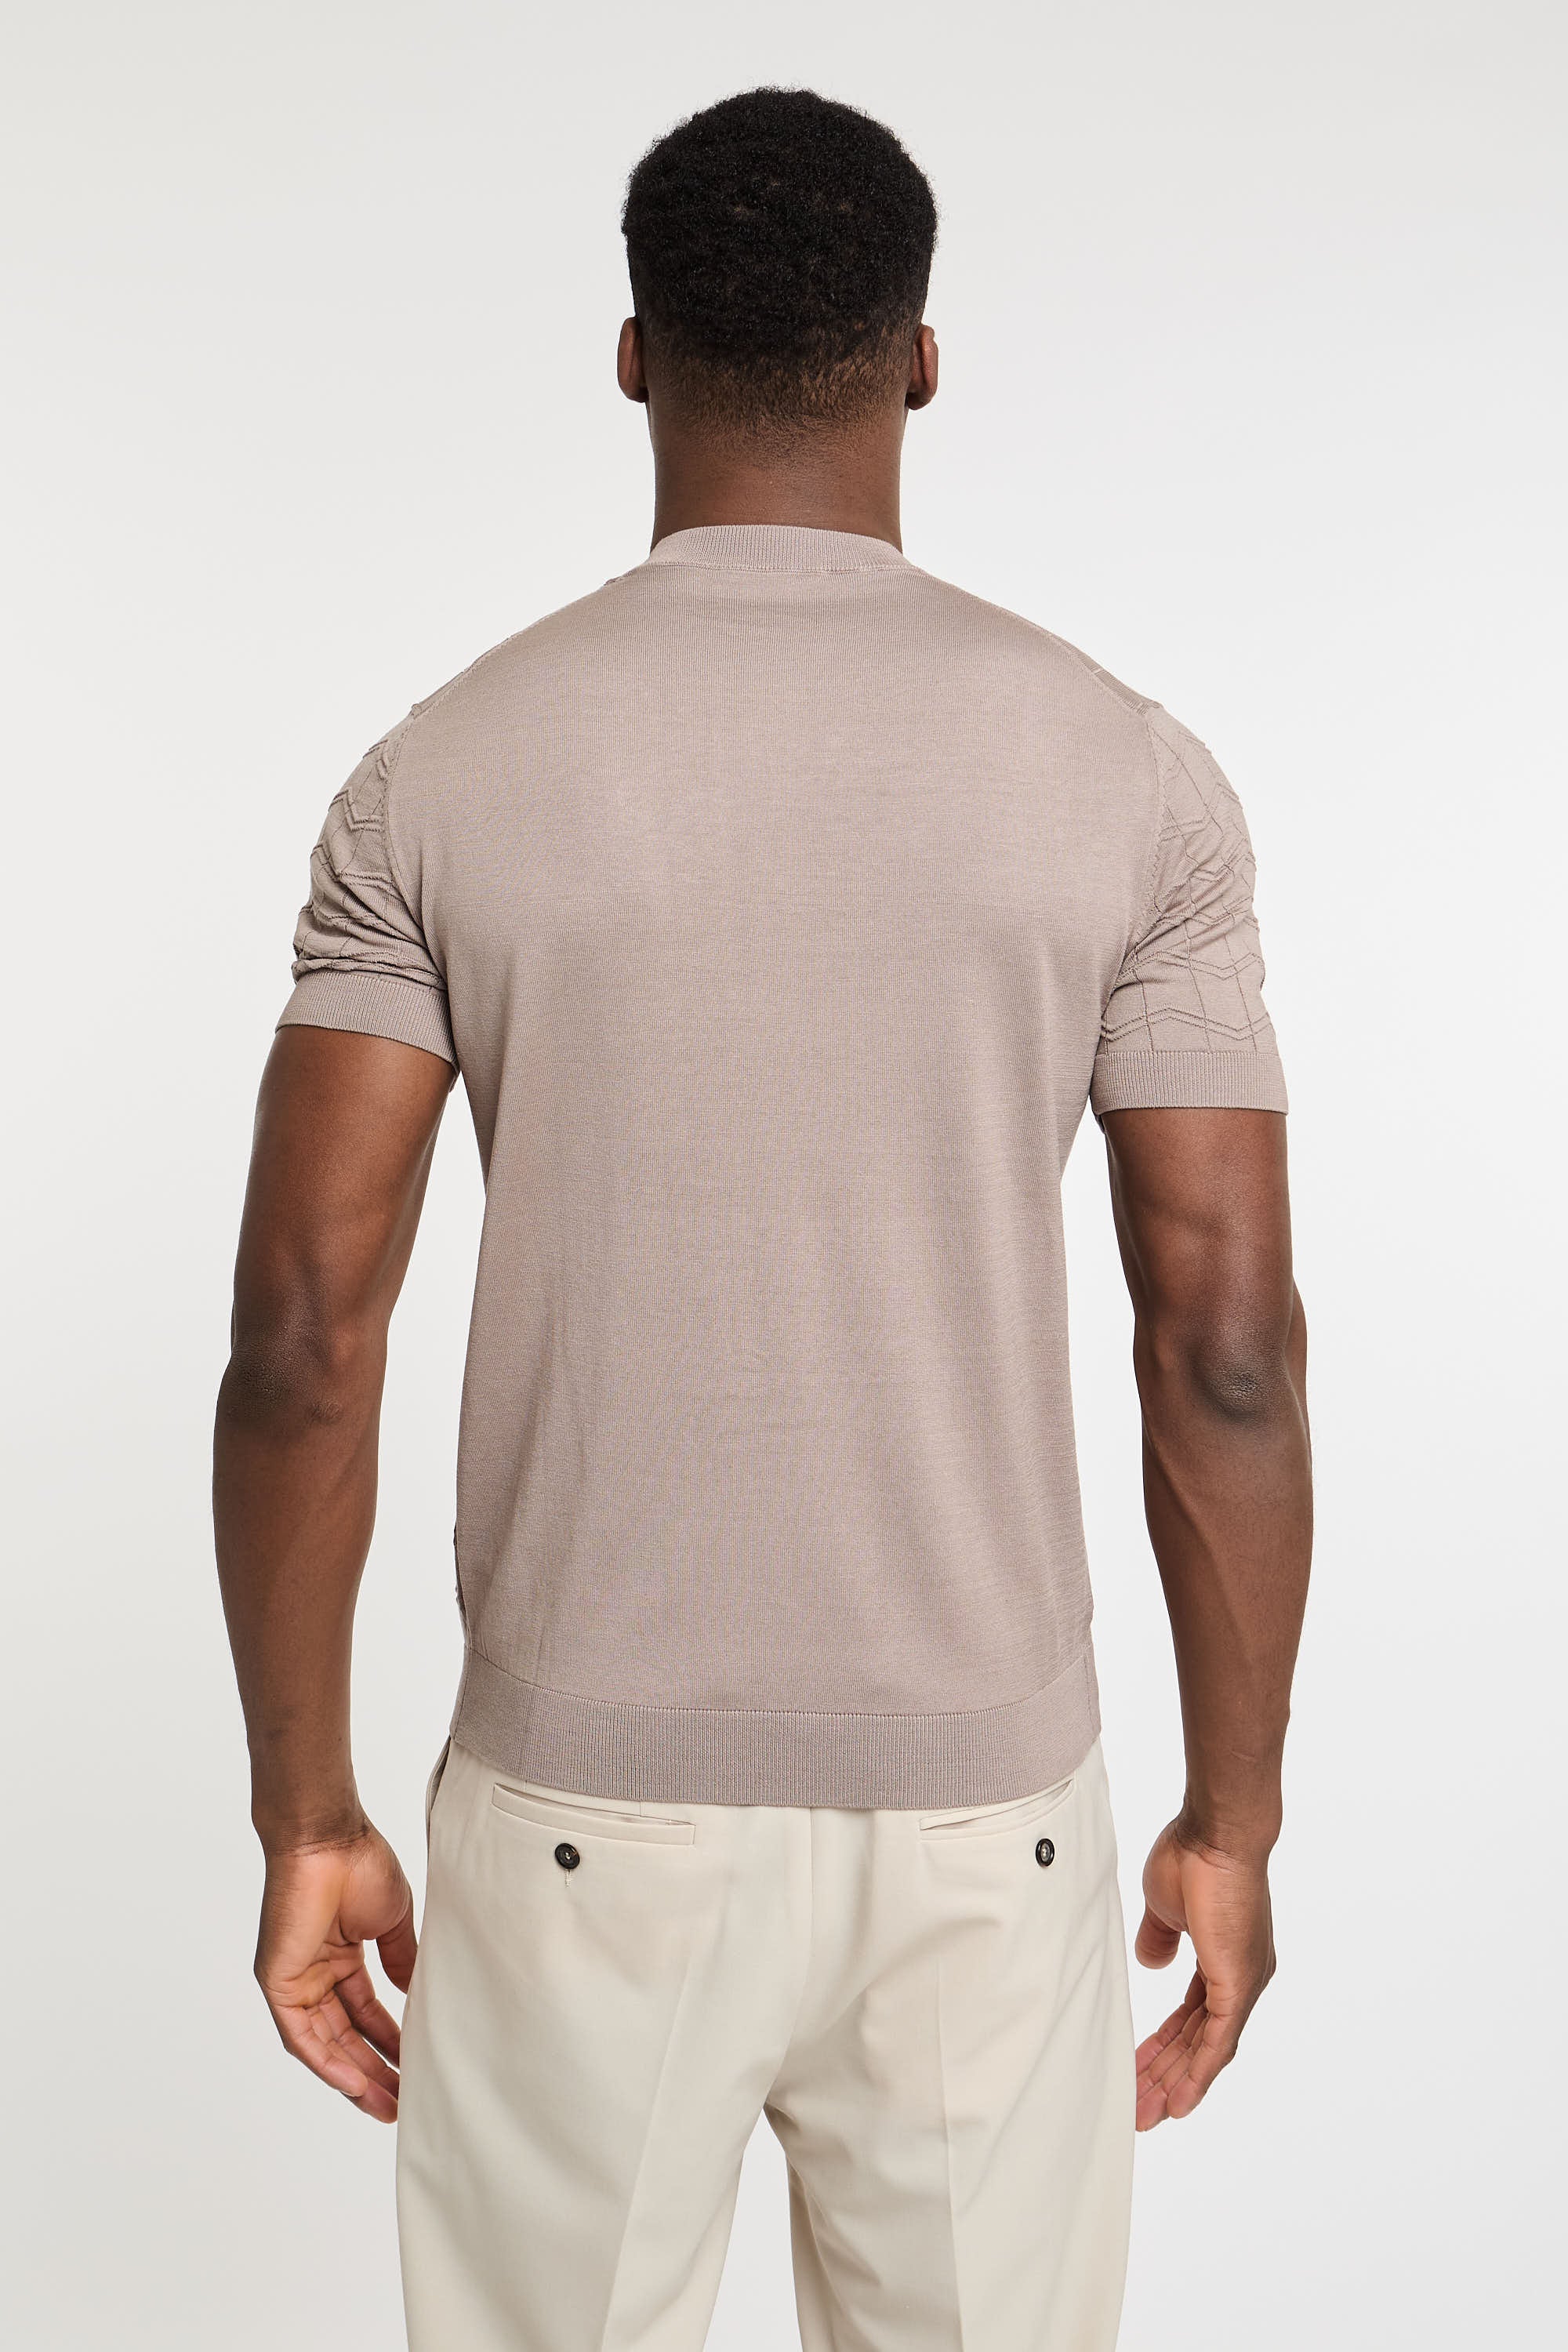 Paolo Pecora Silk/Cotton Taupe T-Shirt-4